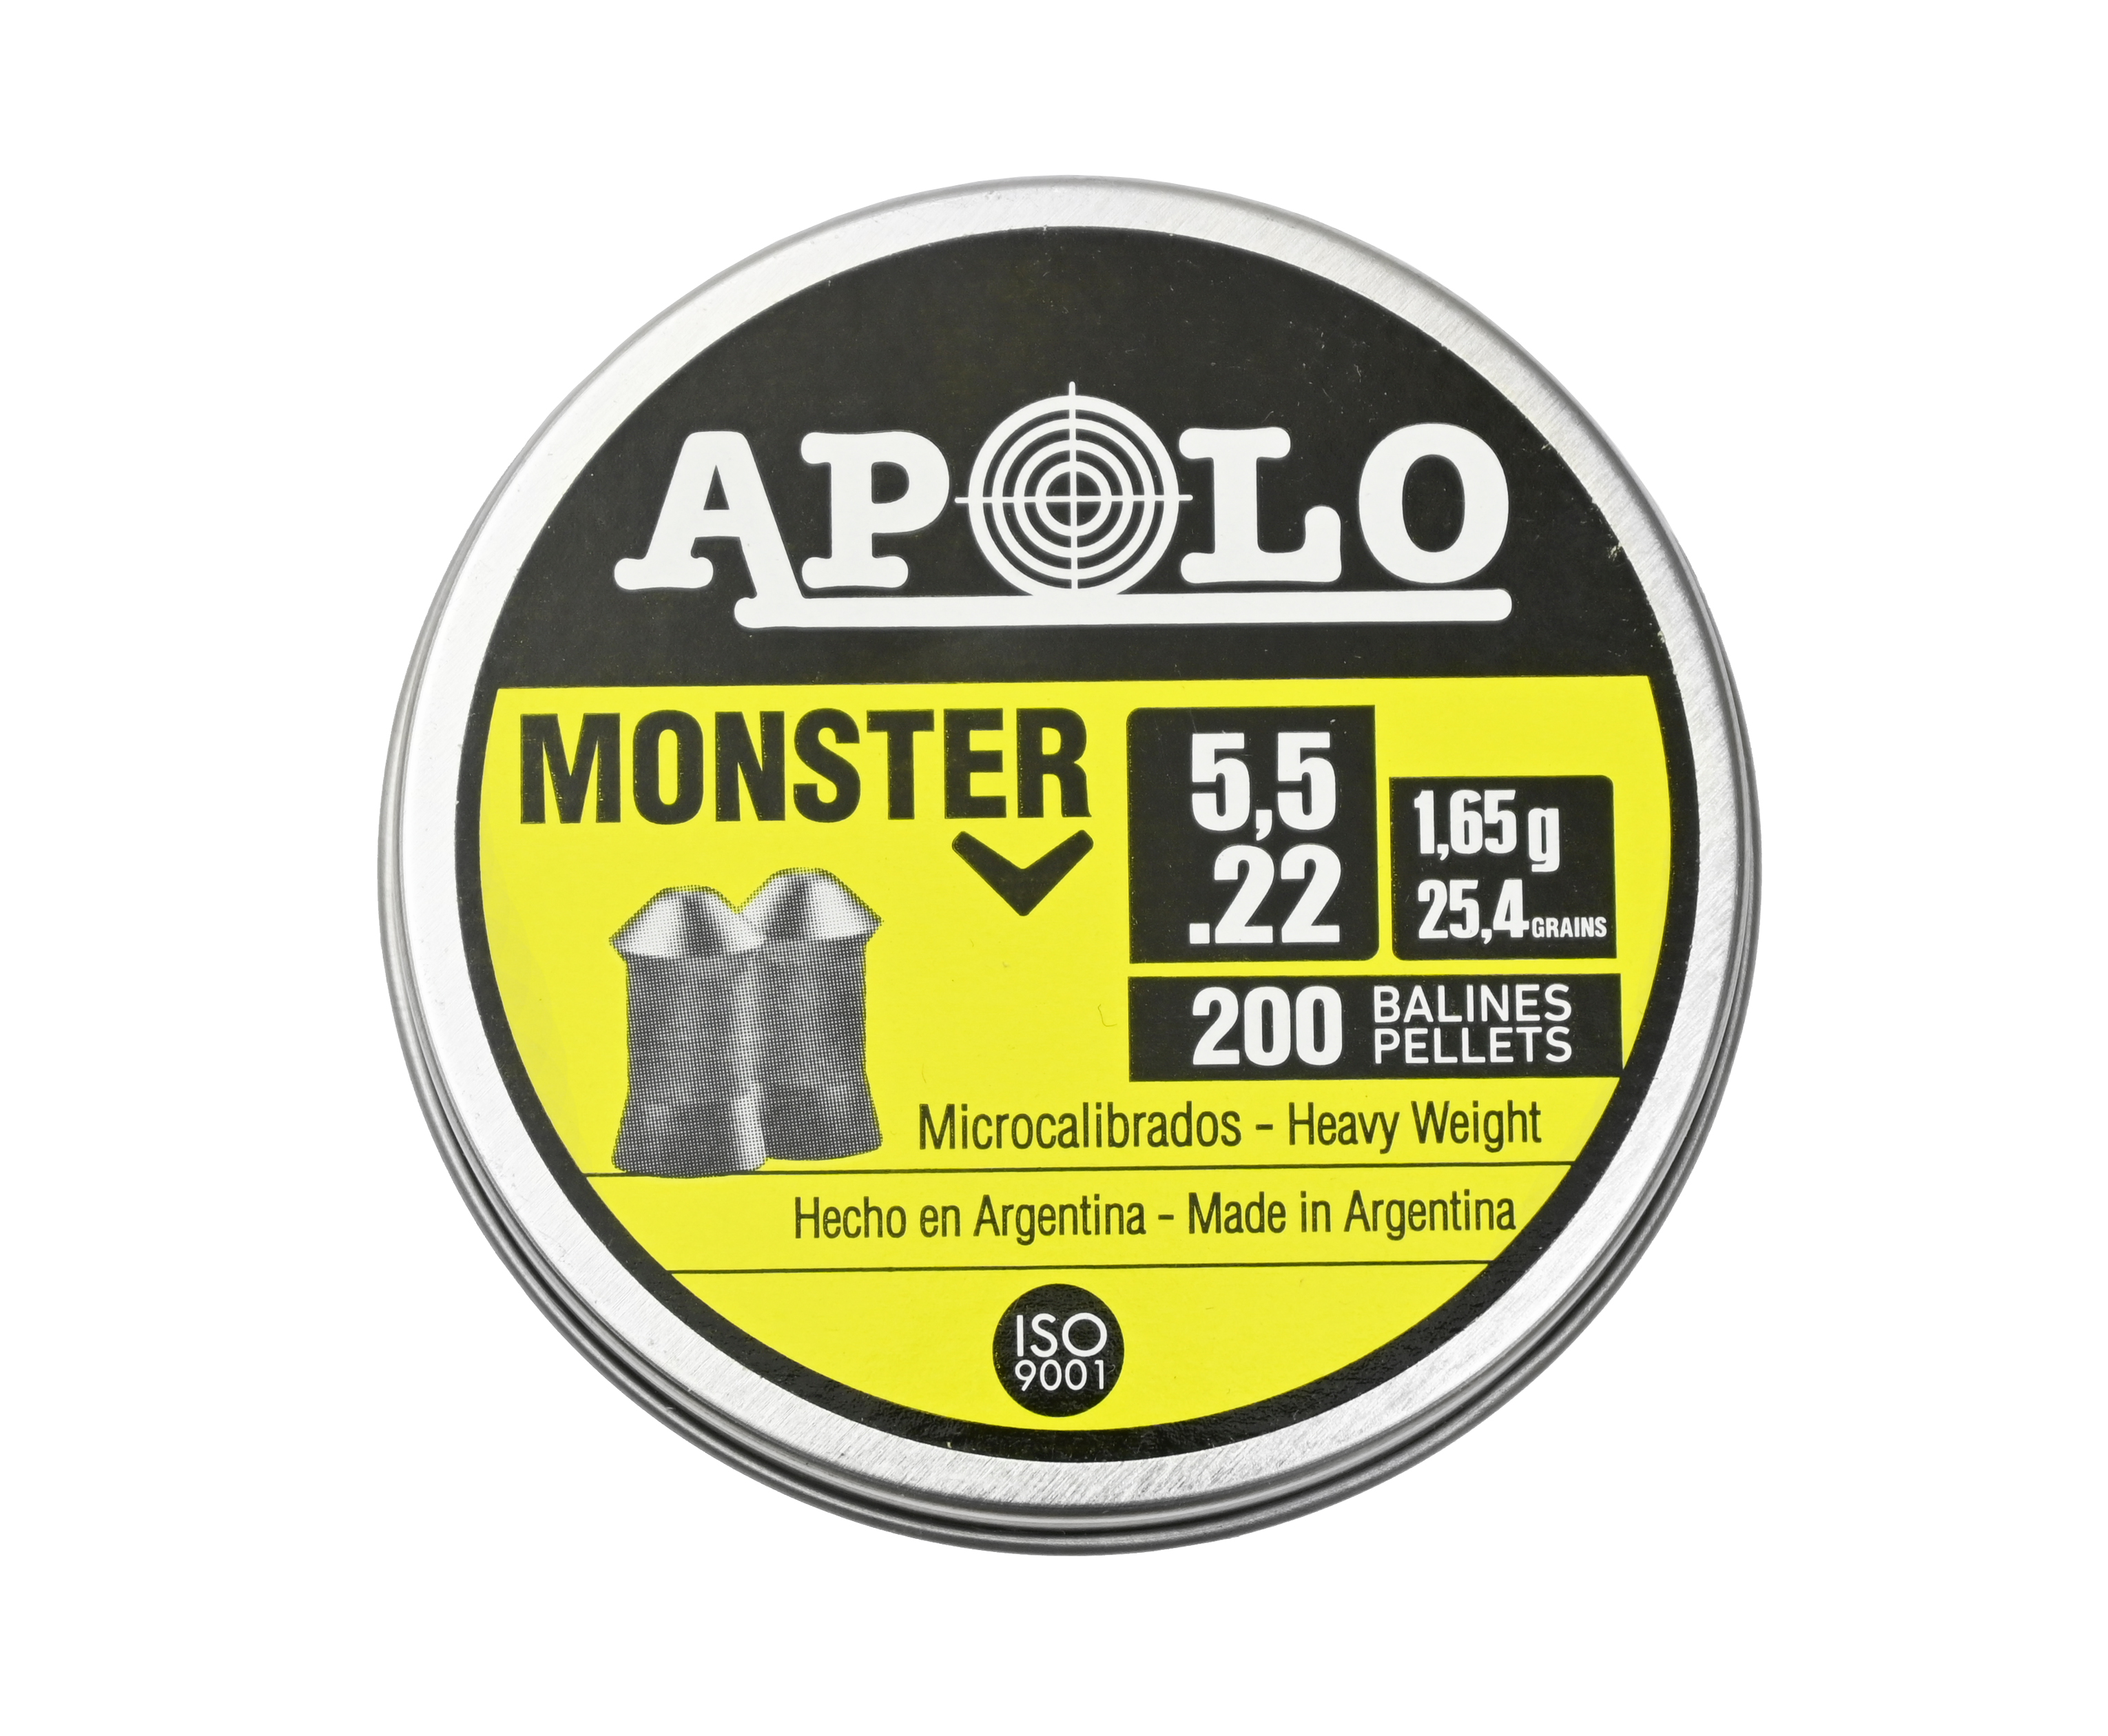 Пули пневматические Apolo Monster 5.5 мм 200 шт, 1.6 грамм